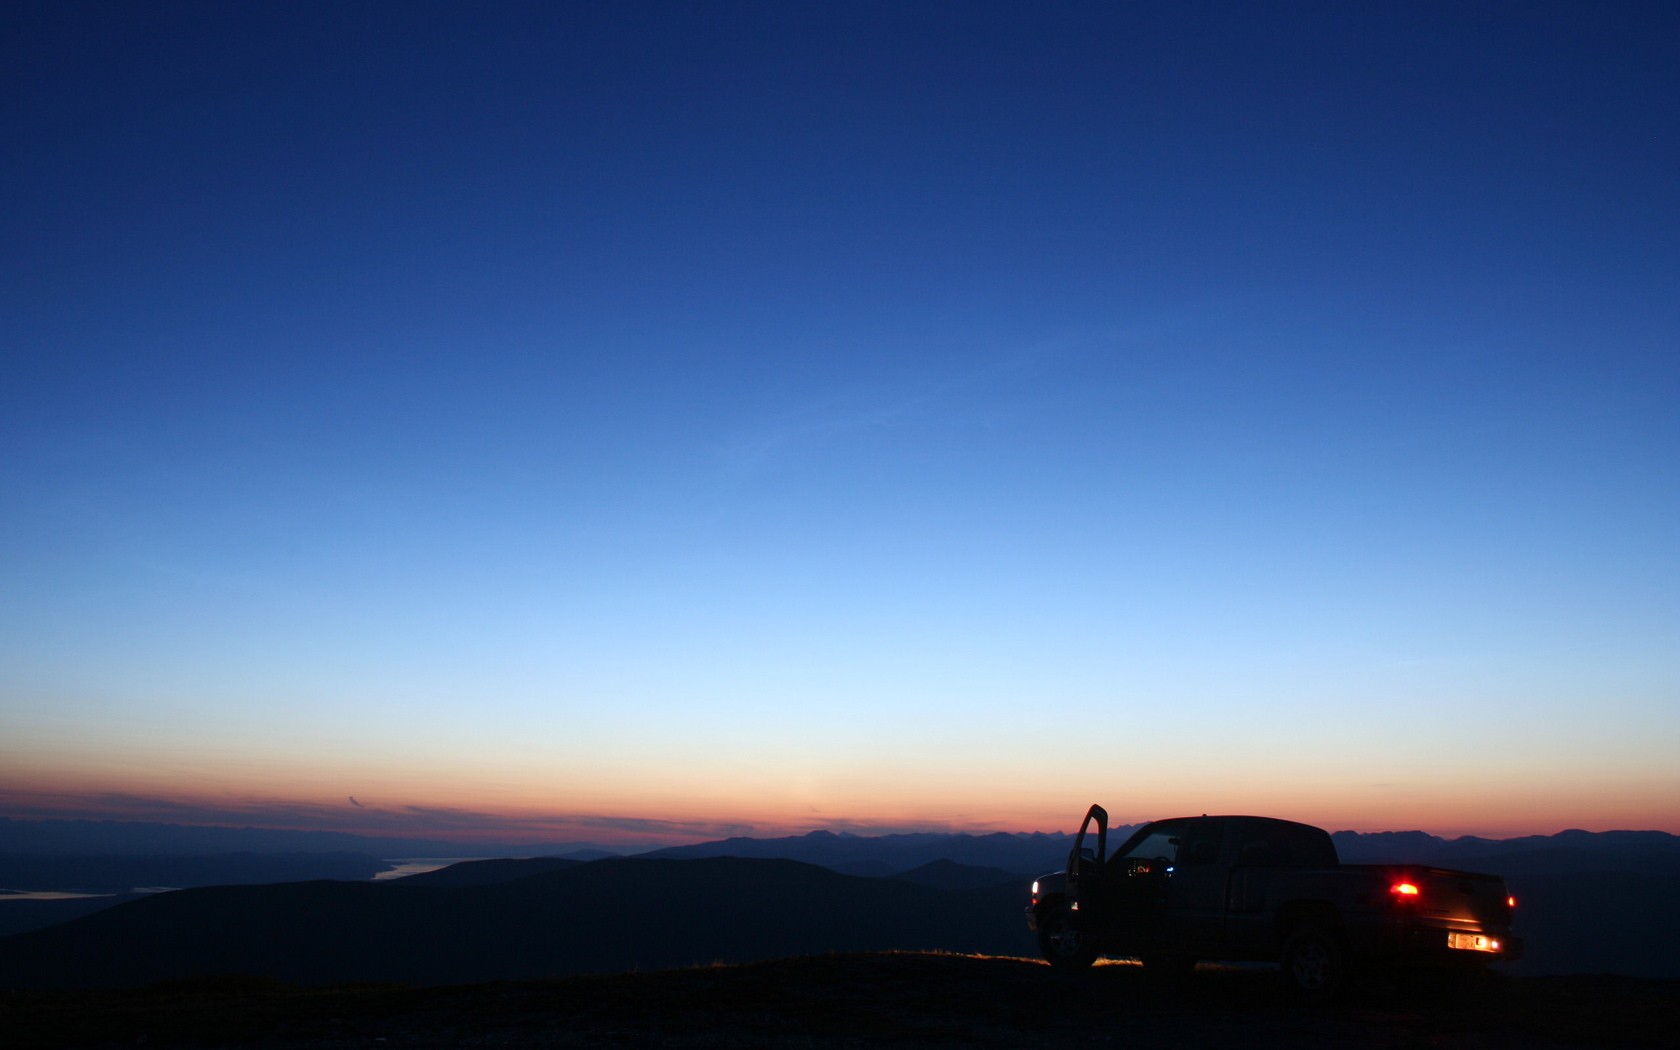 General 1680x1050 car night vehicle landscape dark sky outdoors